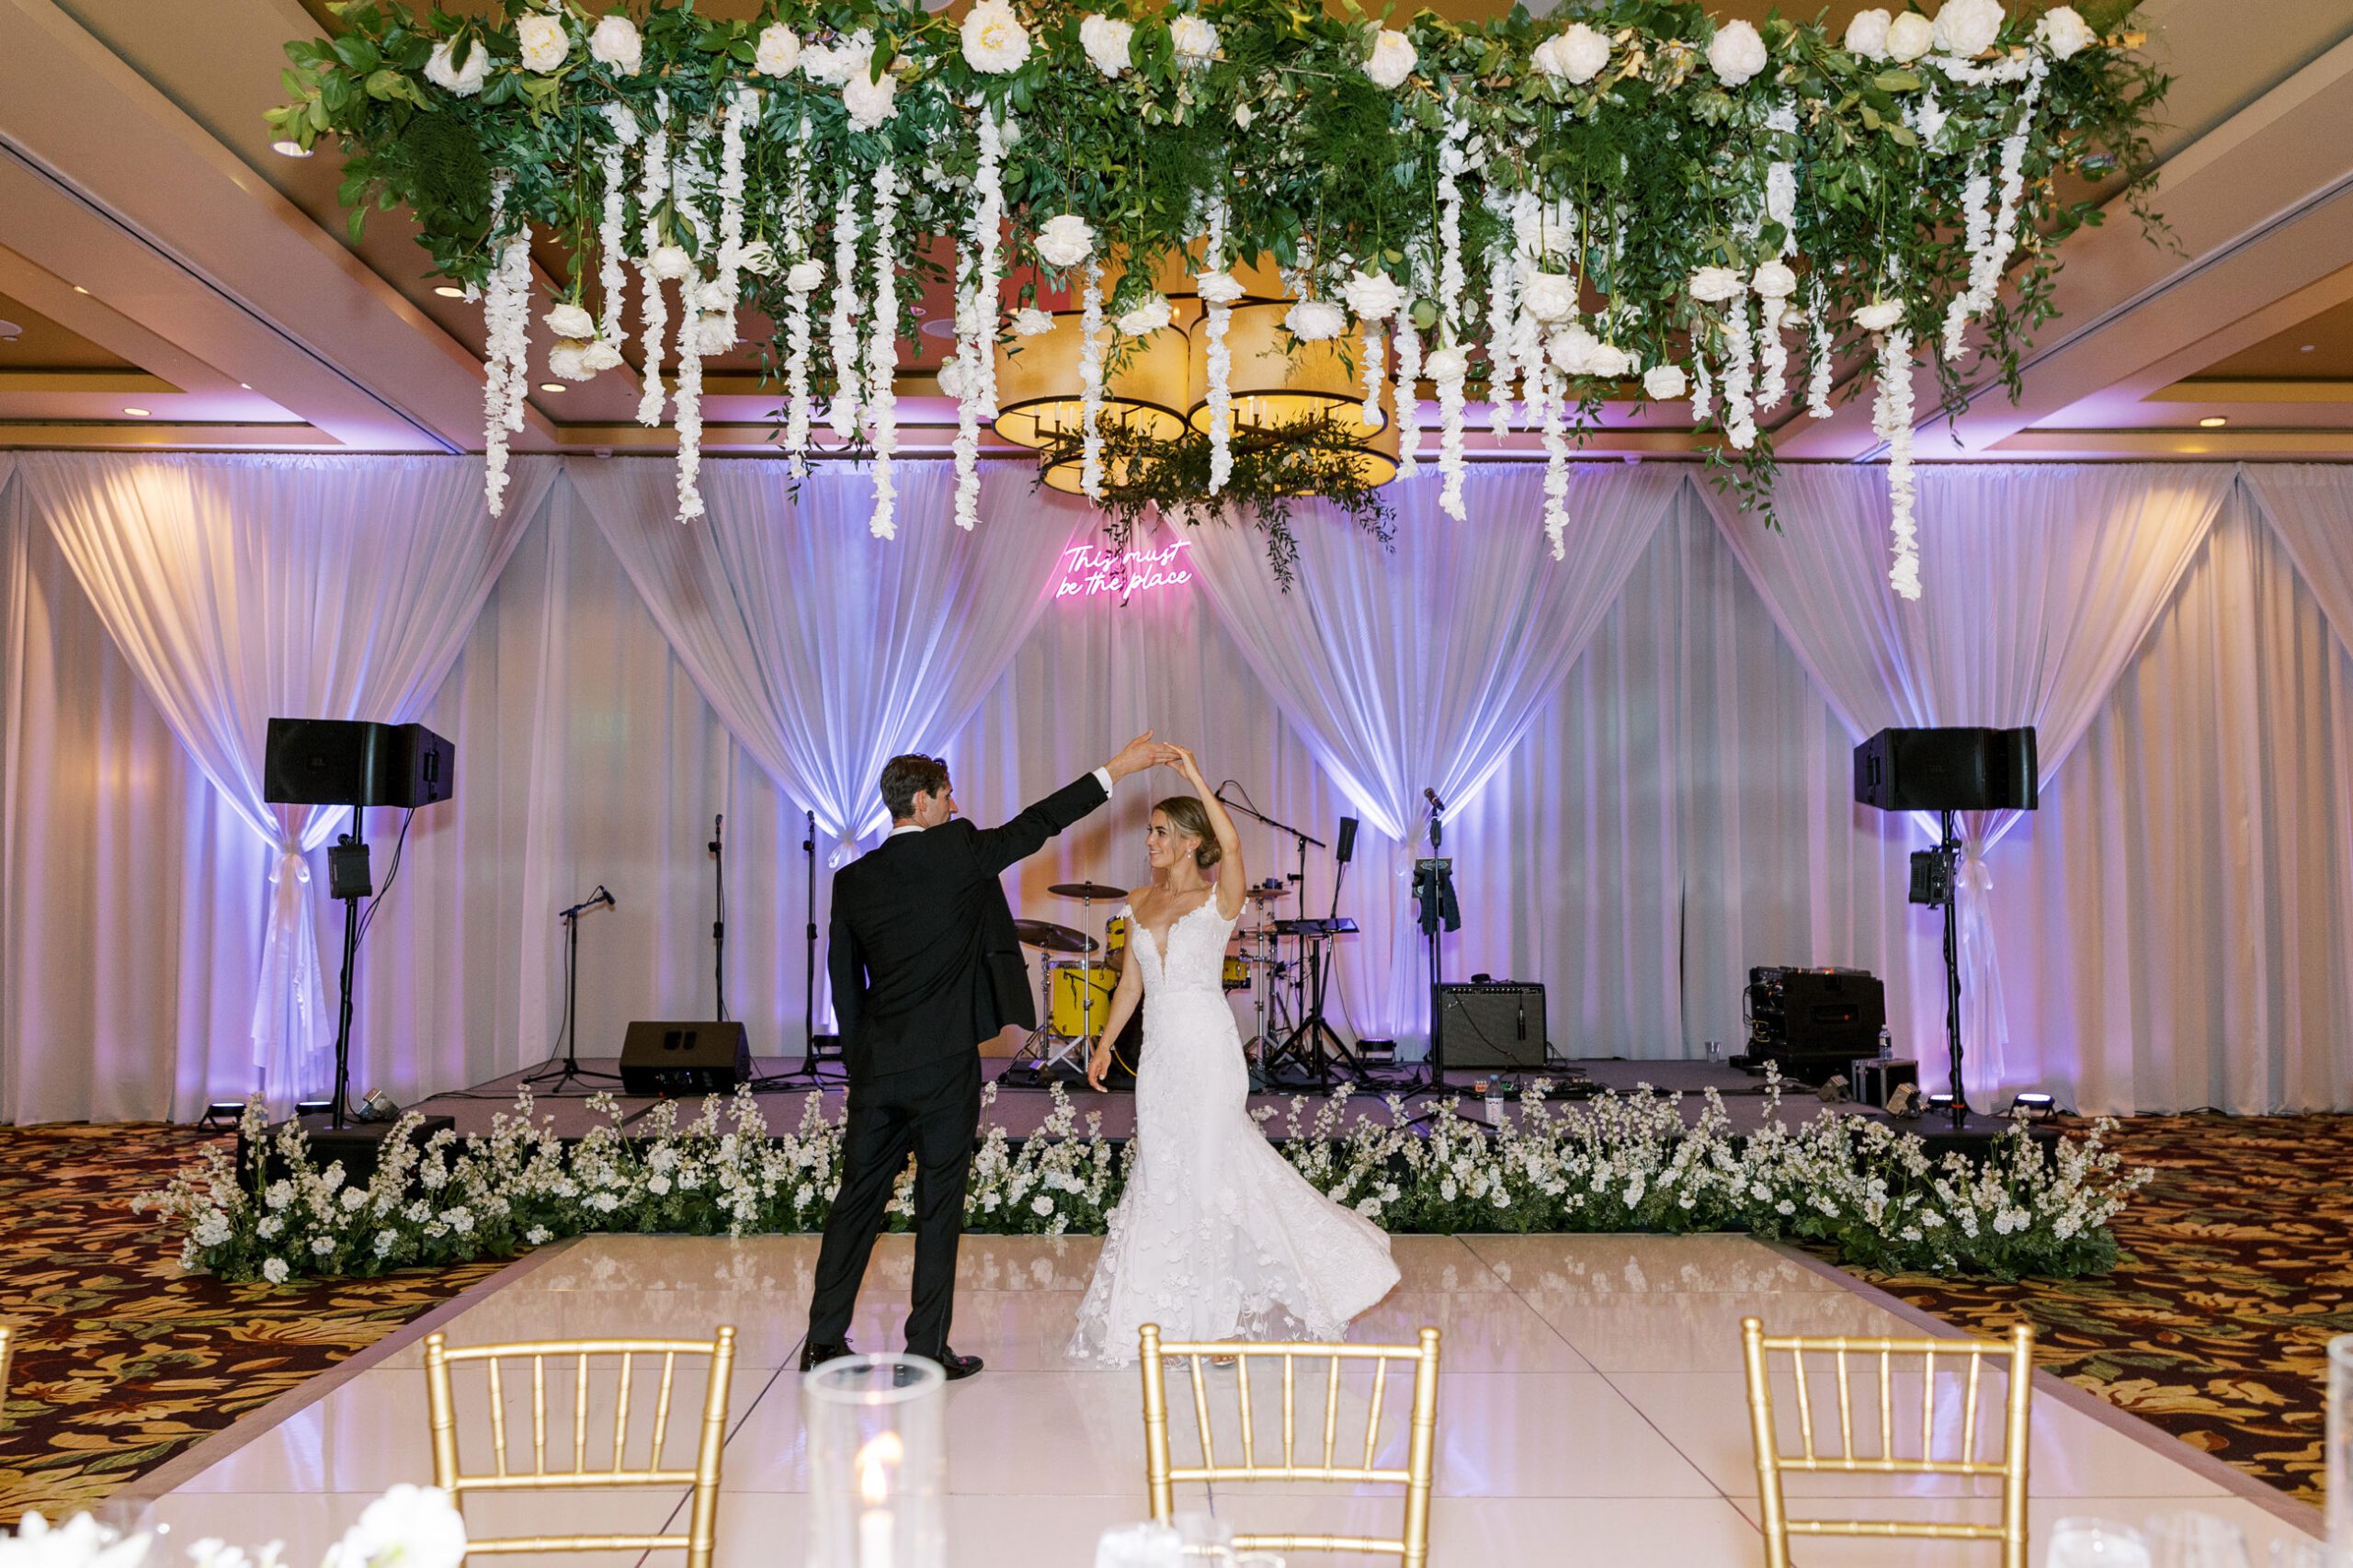 groom bride dance at wedding reception stage